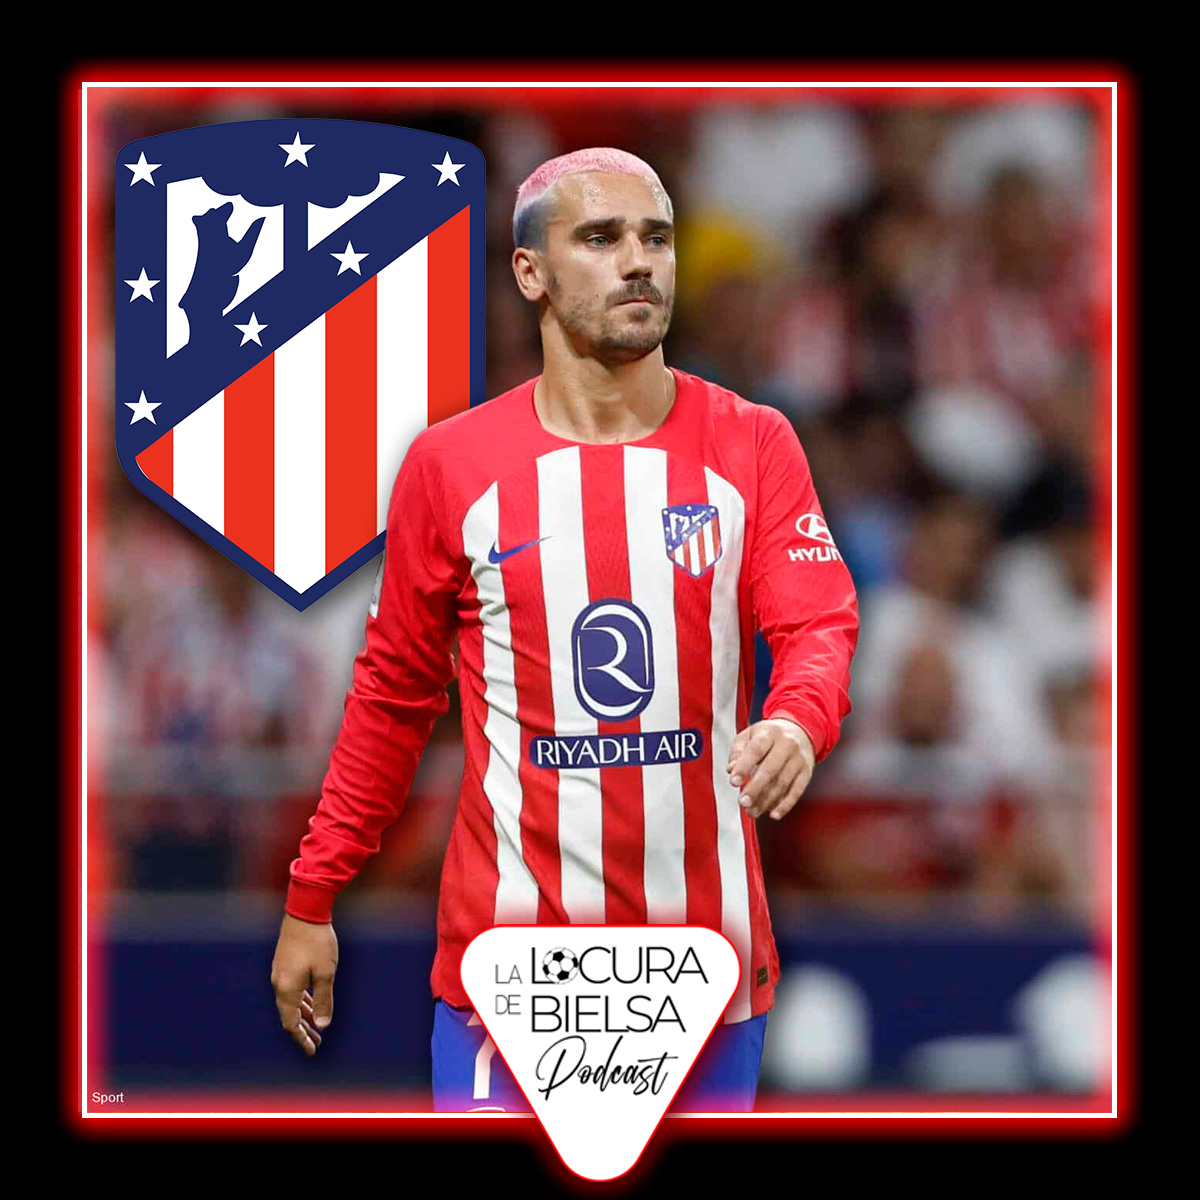 mejor jugador historia Atlético de Madrid Griezmann locura de Bielsa podcast futbol